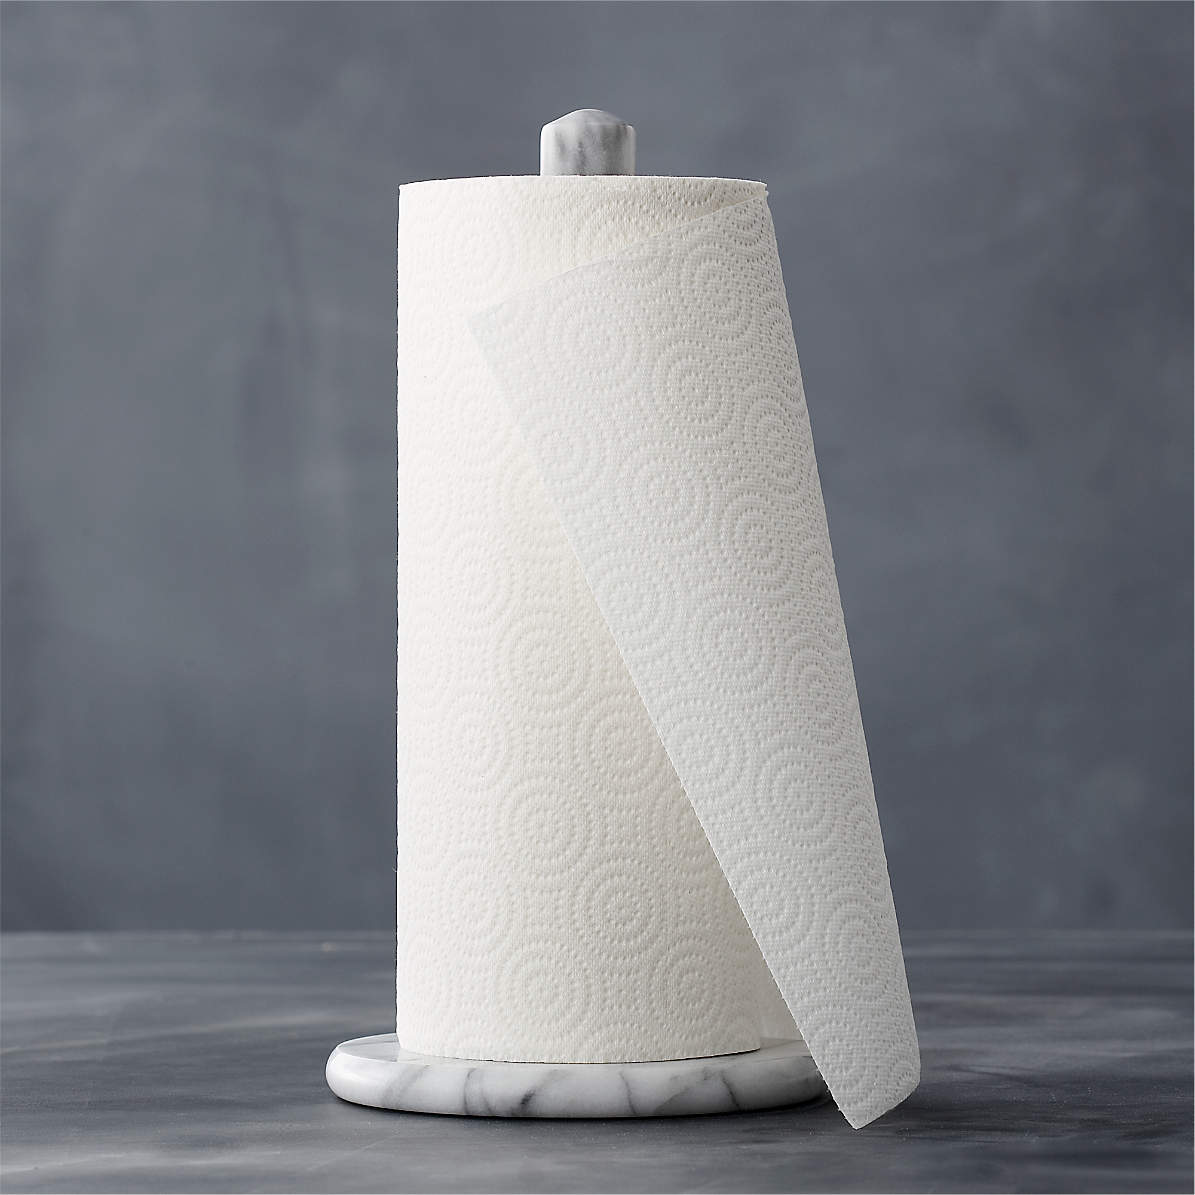 Acrylic Paper Towel Holder Vertical Napkin Holder Innovative Desktop Box Mount 